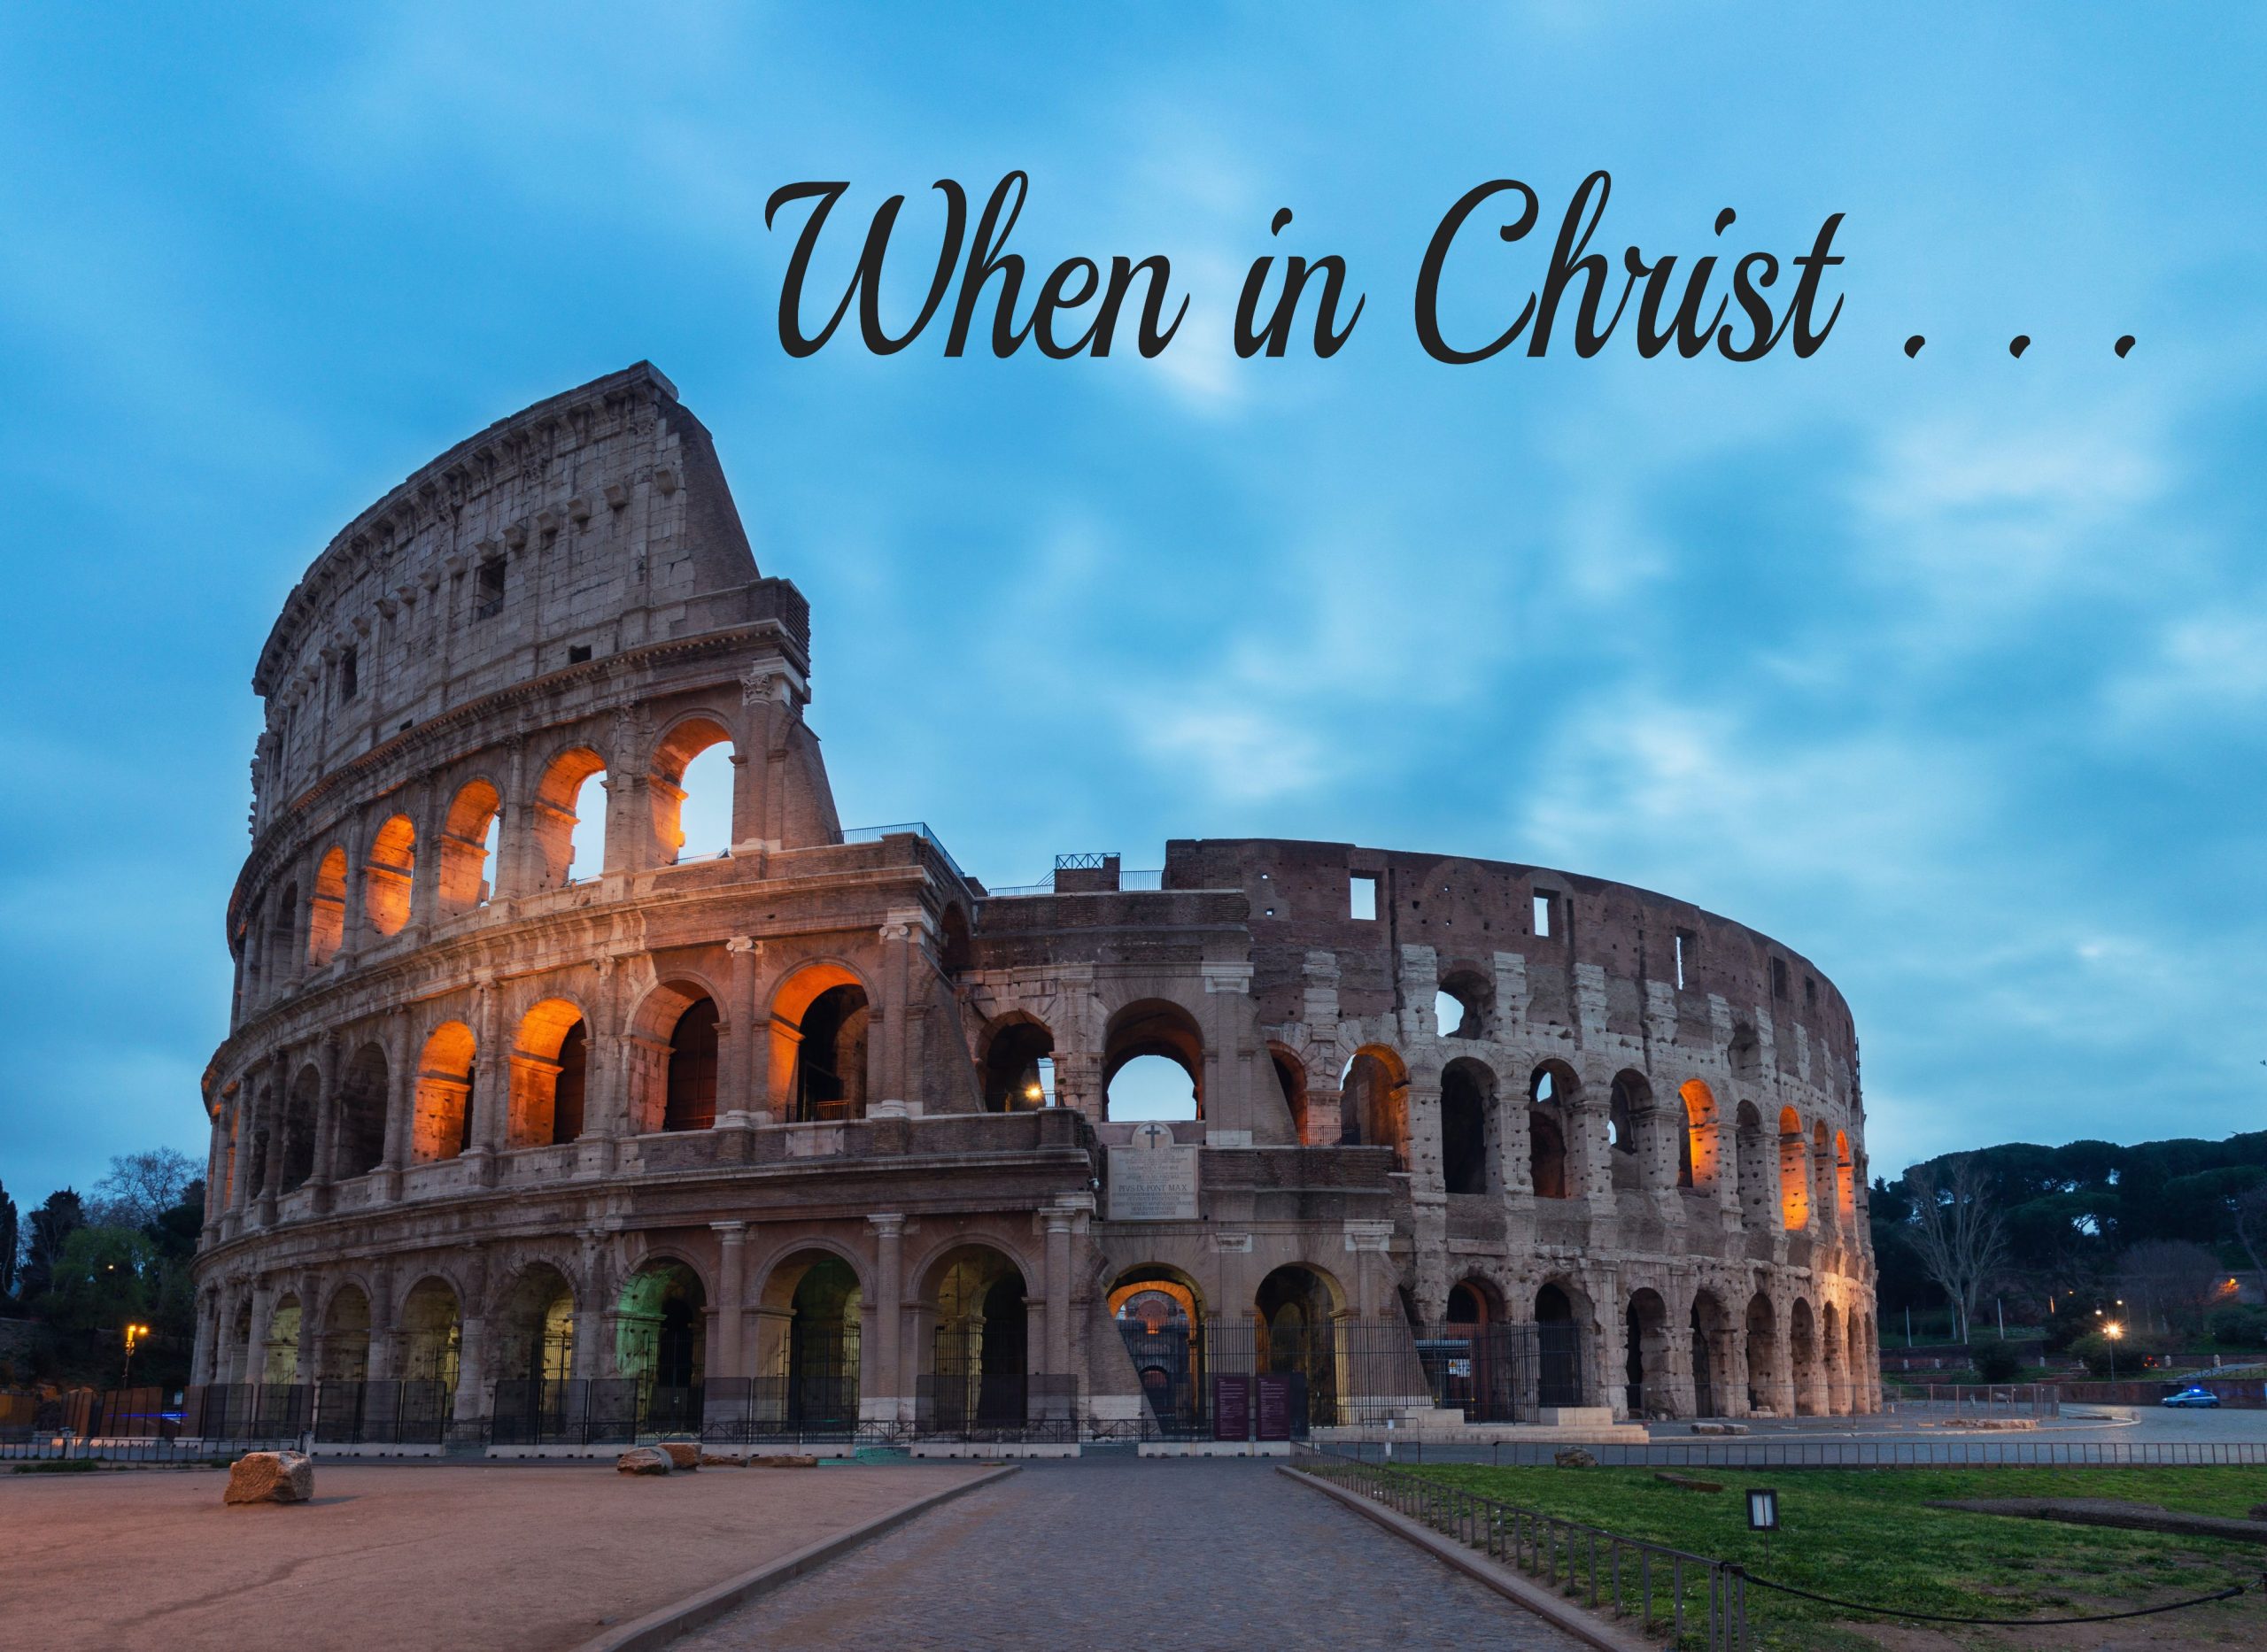 When in Rome - When in Christ